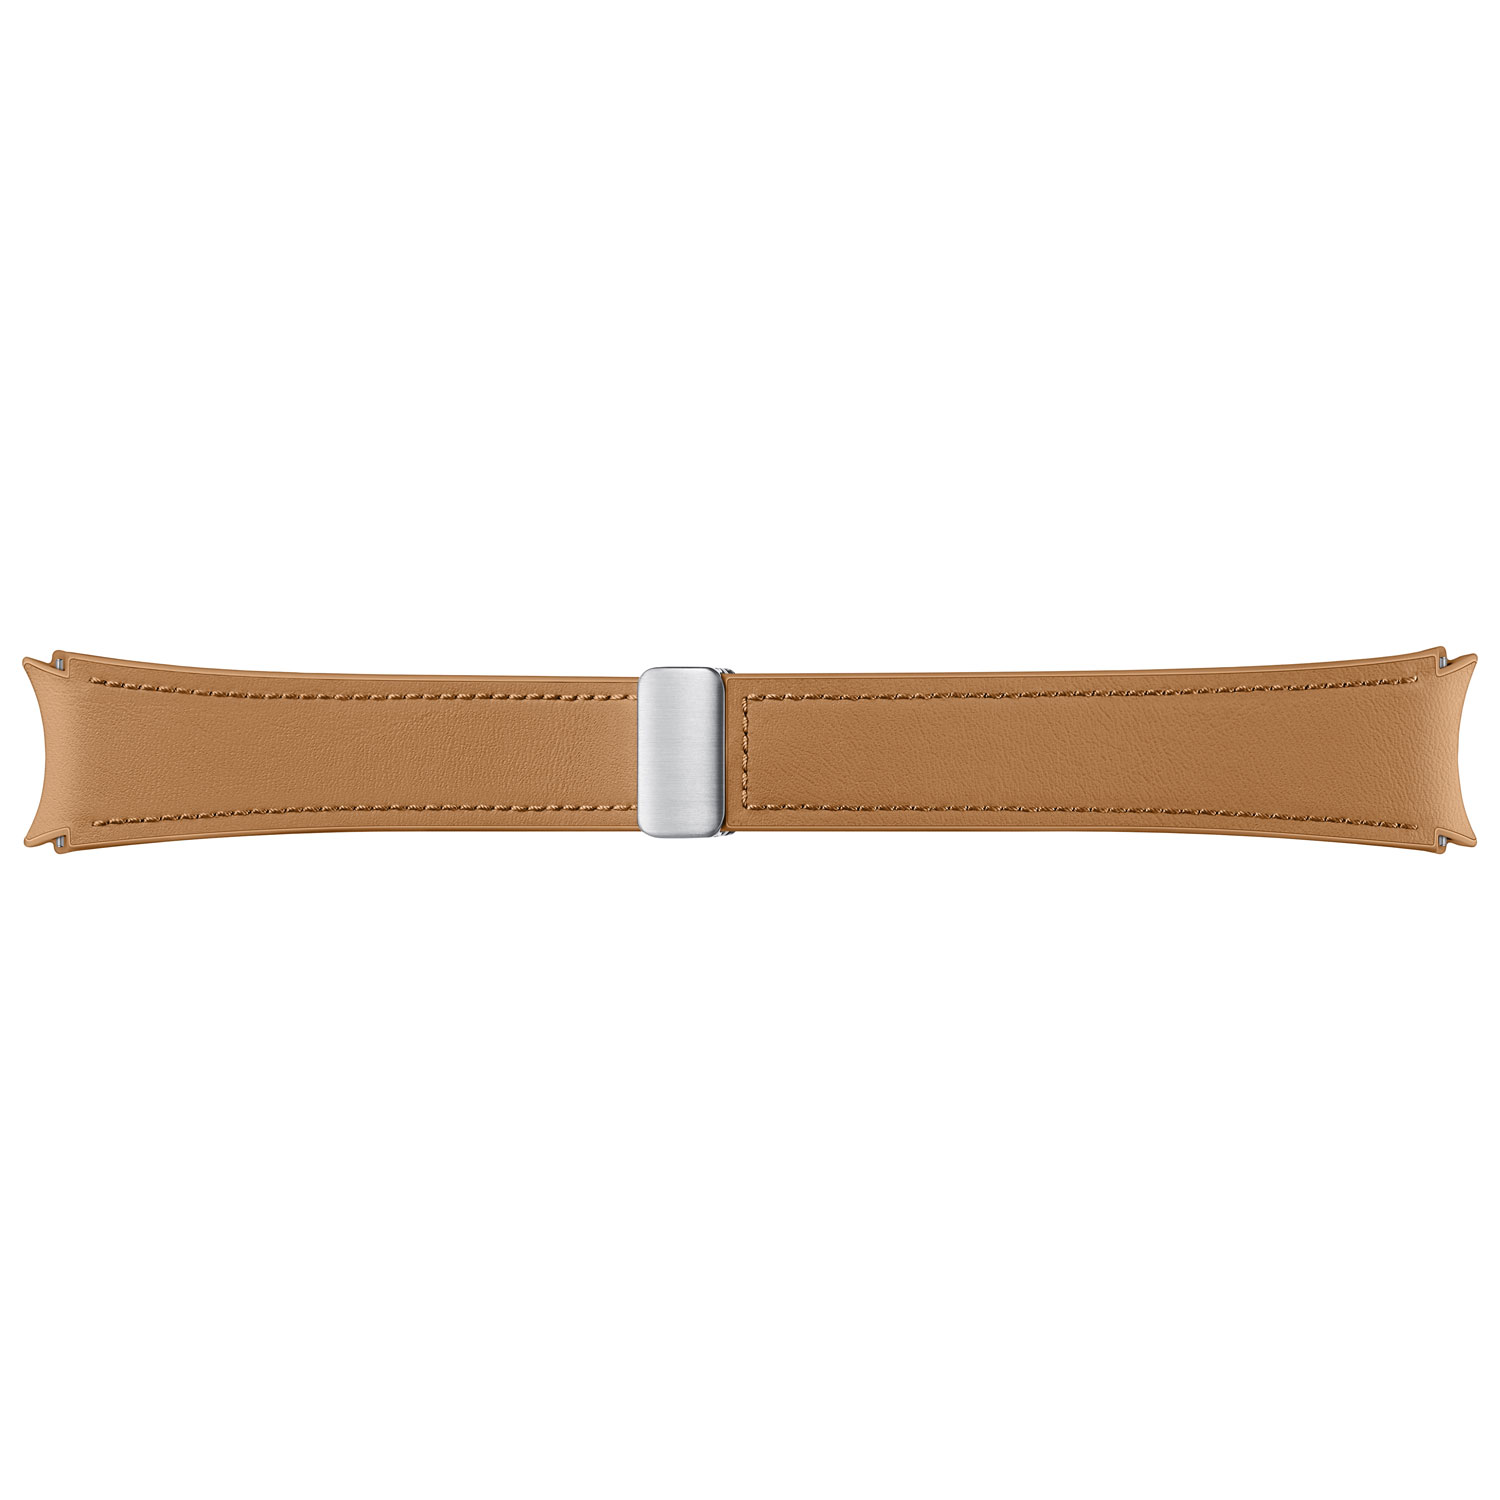 Samsung D-Buckle Vegan Leather Strap for Galaxy Watch - Medium/Large - Camel